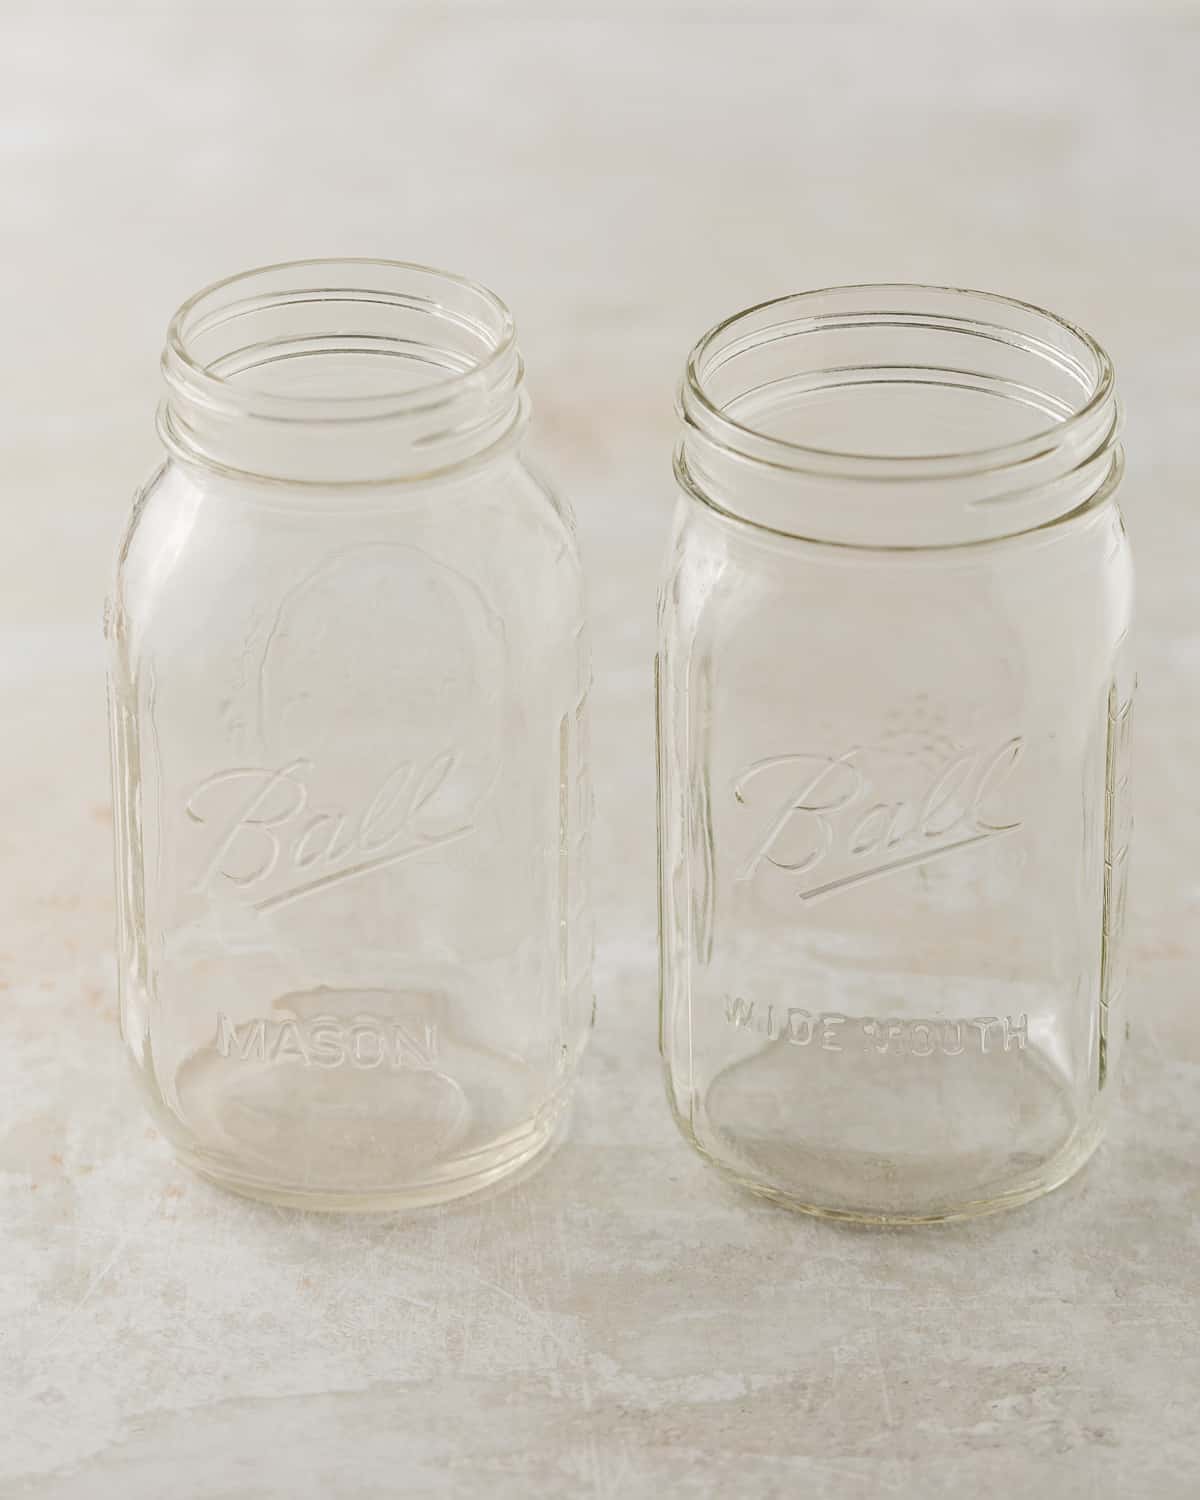 A regular mouth 32-ounce mason jar and a wide-mouth 32-ounce mason jar.